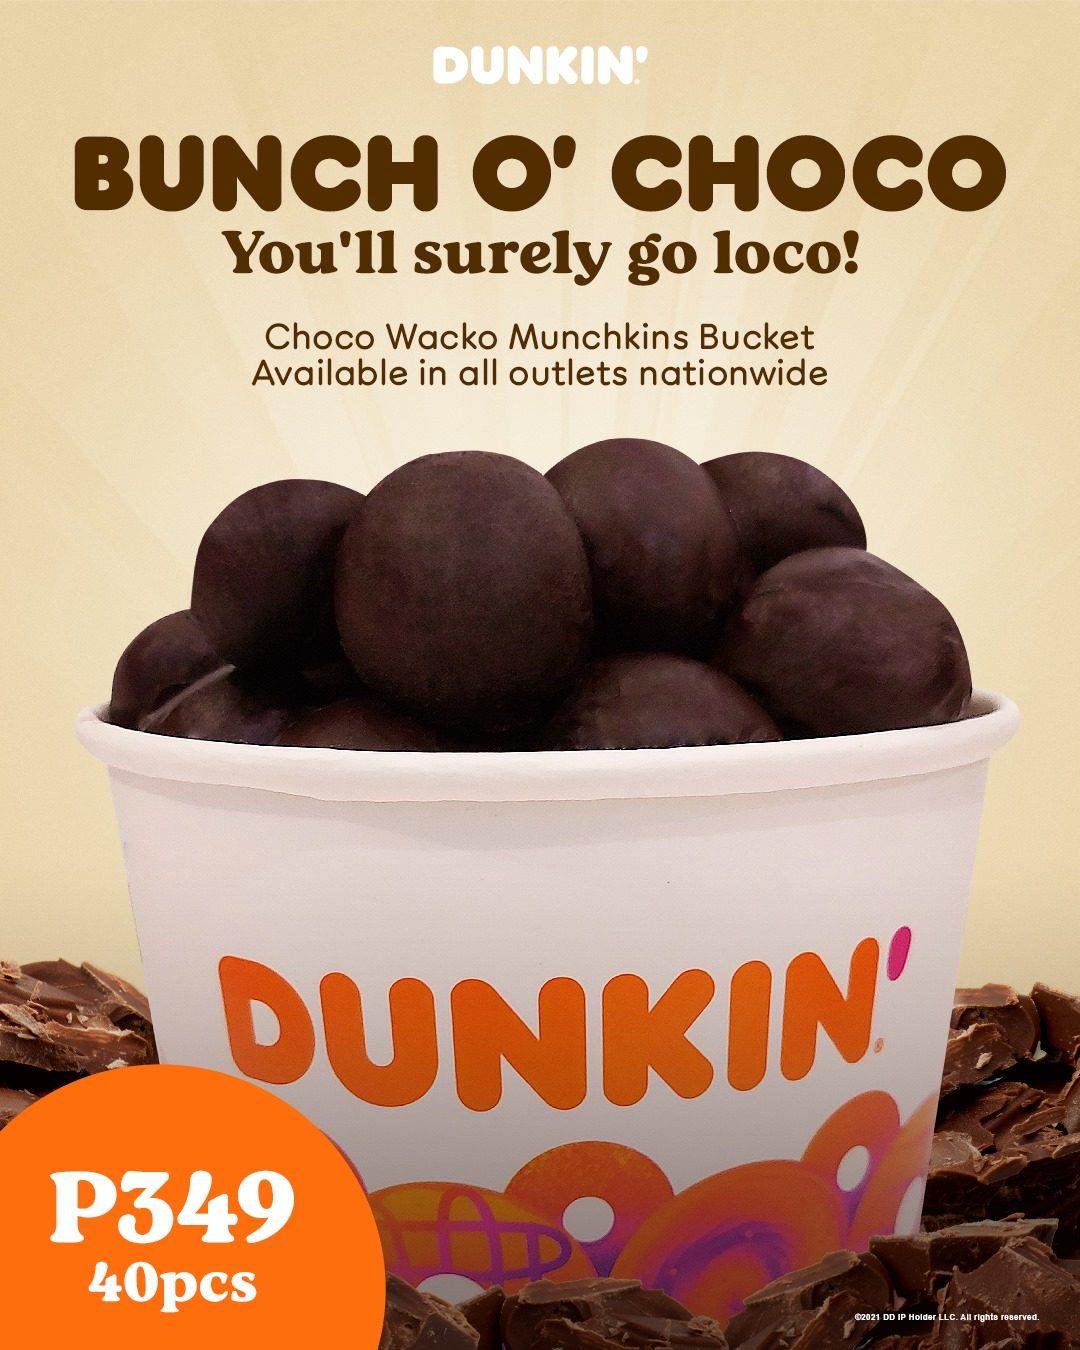 Dunkin' choco wacko munchkins now available in buckets